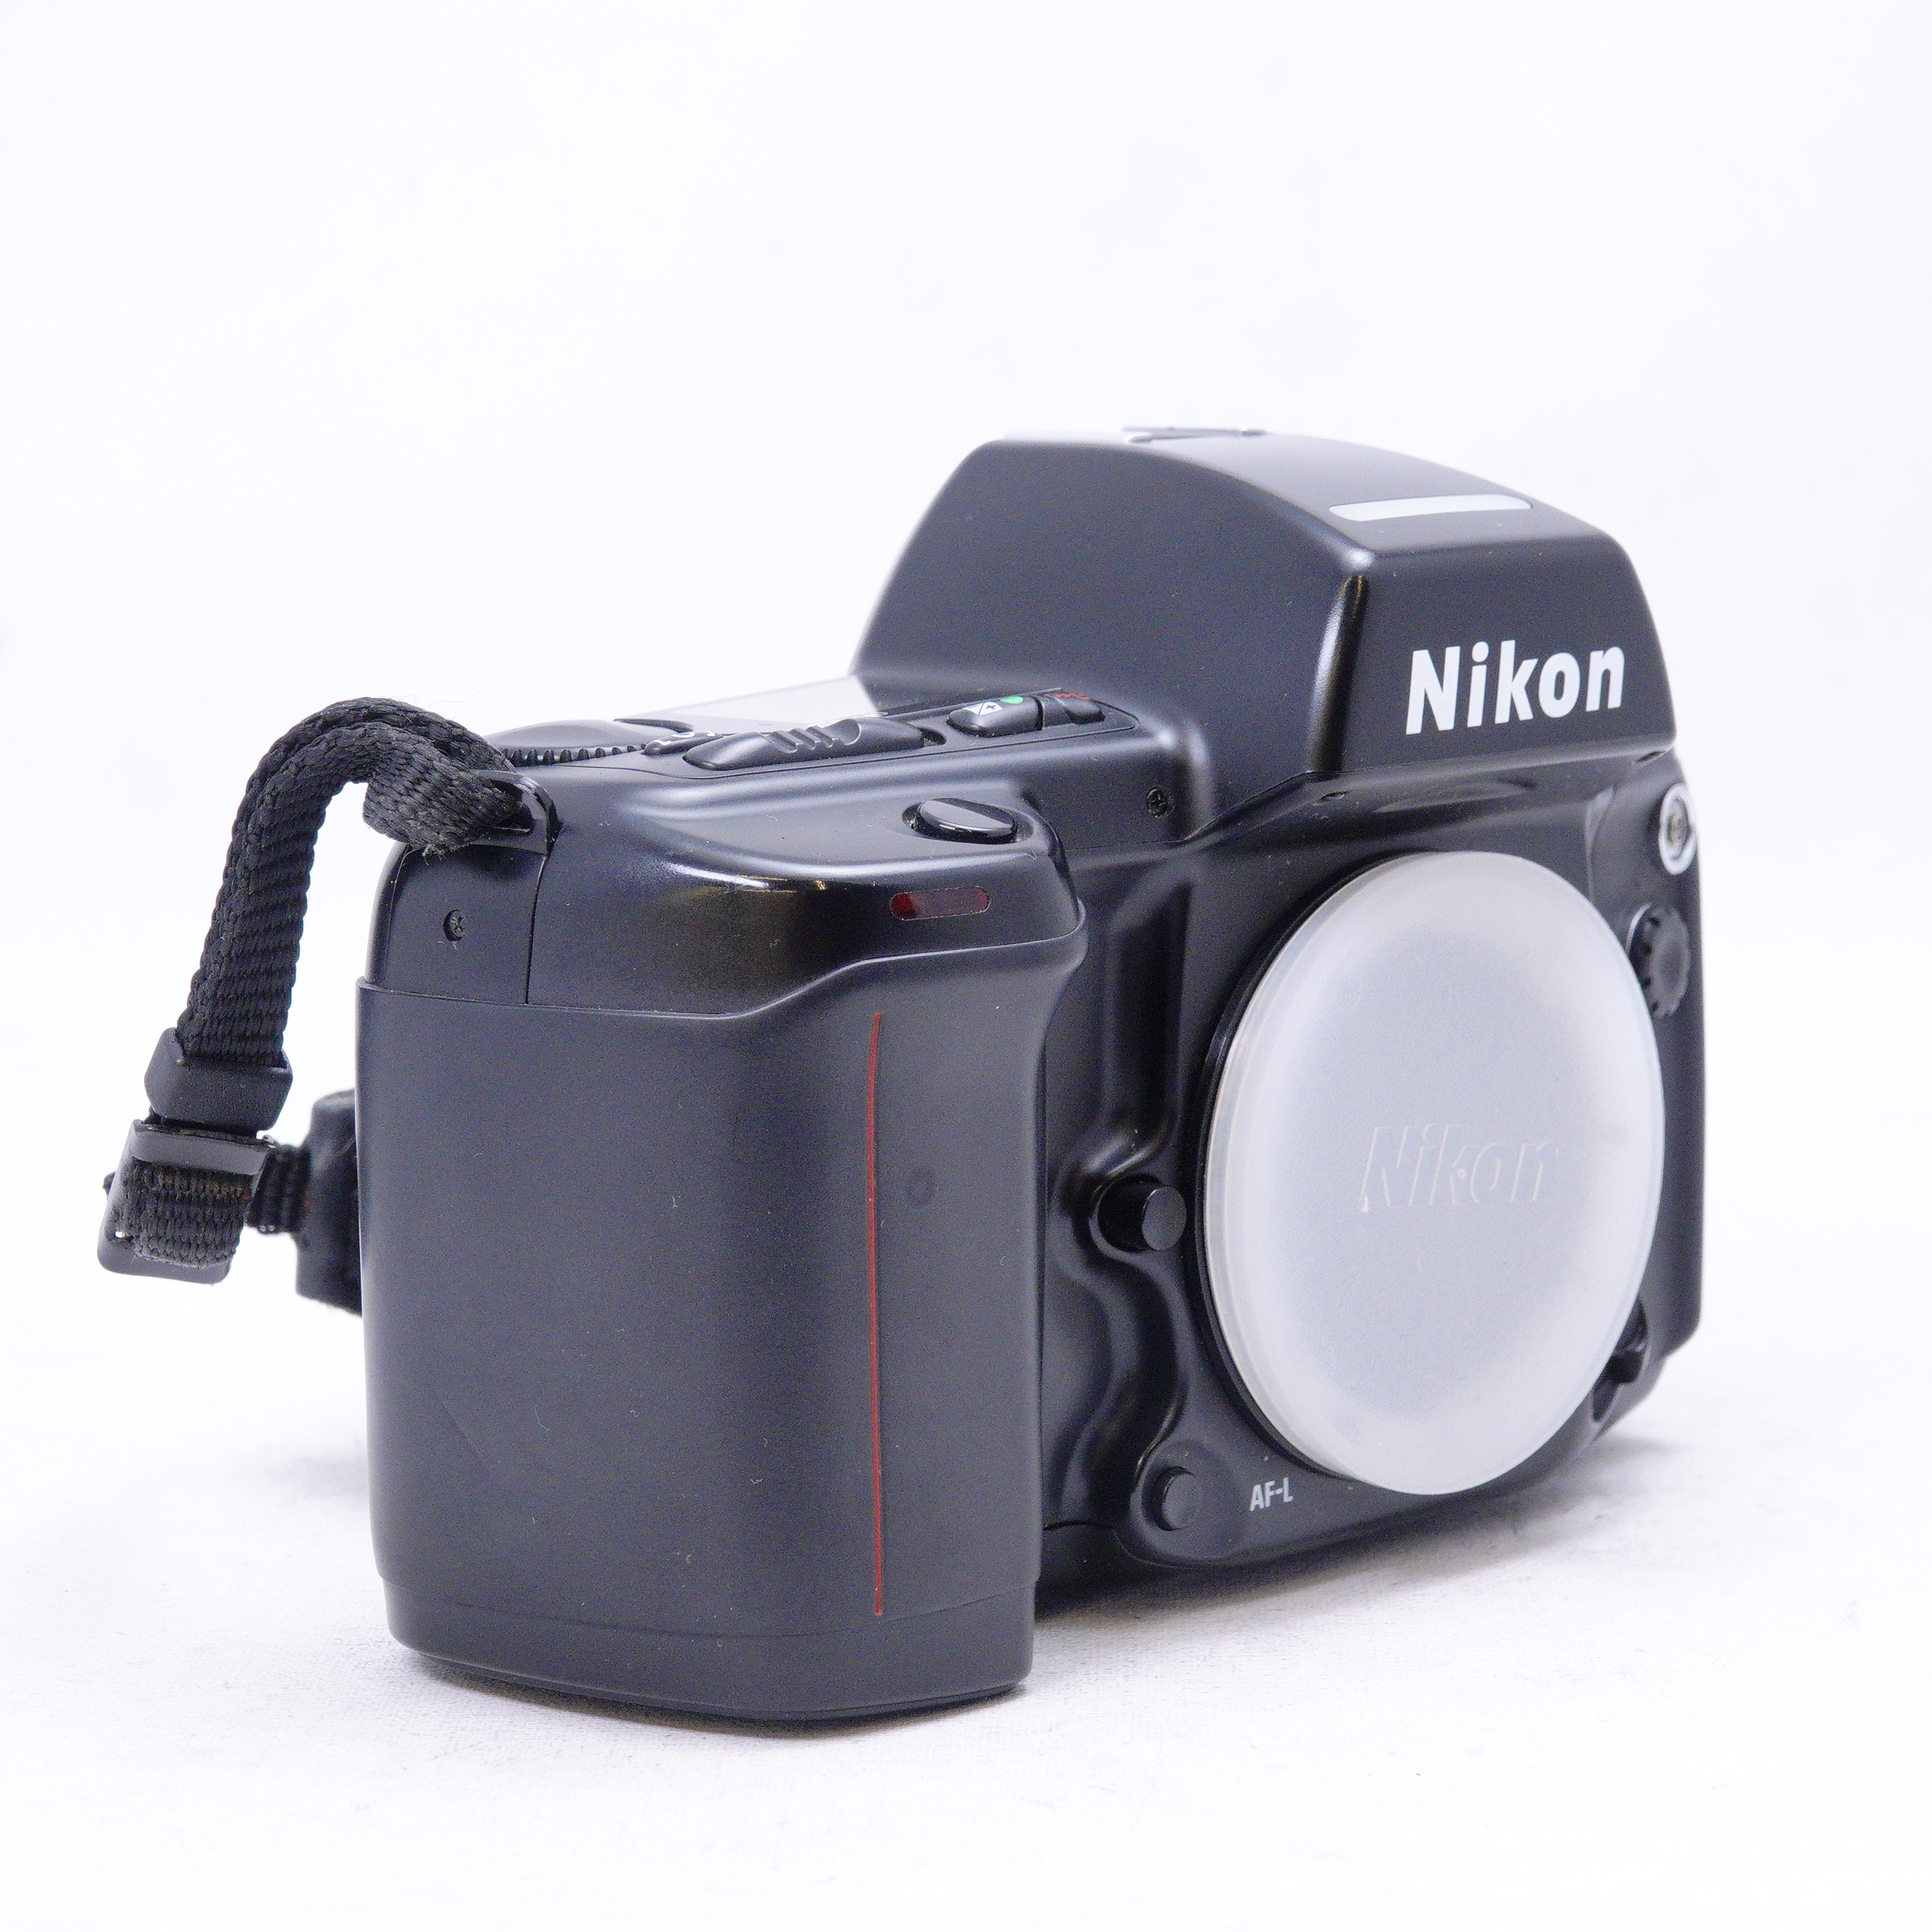 Nikon N90s - Usado